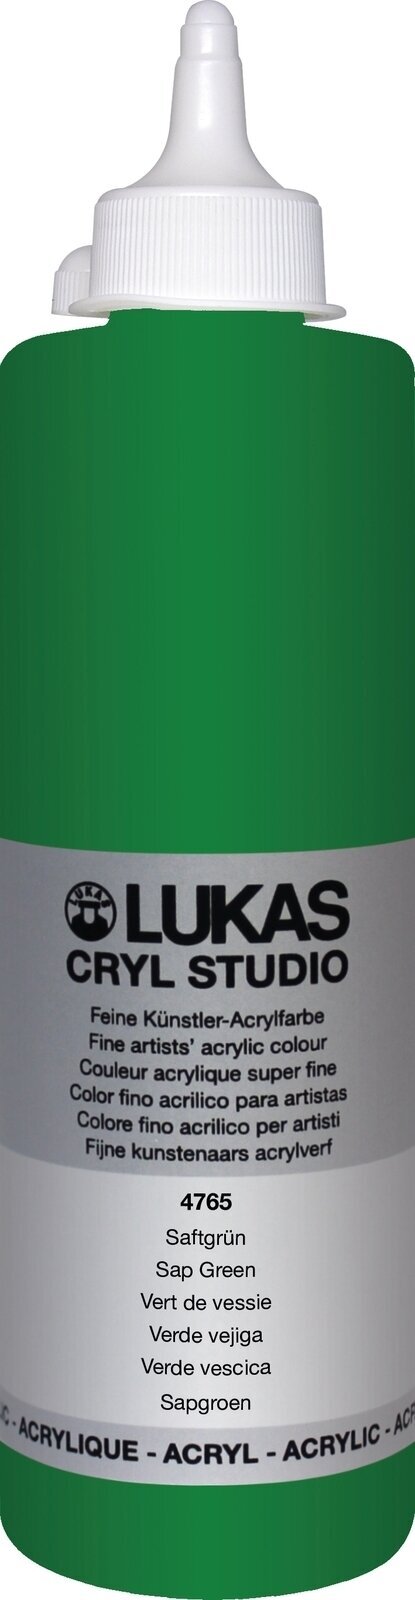 Acrylic Paint Lukas Cryl Studio Acrylic Paint 500 ml Sap Green